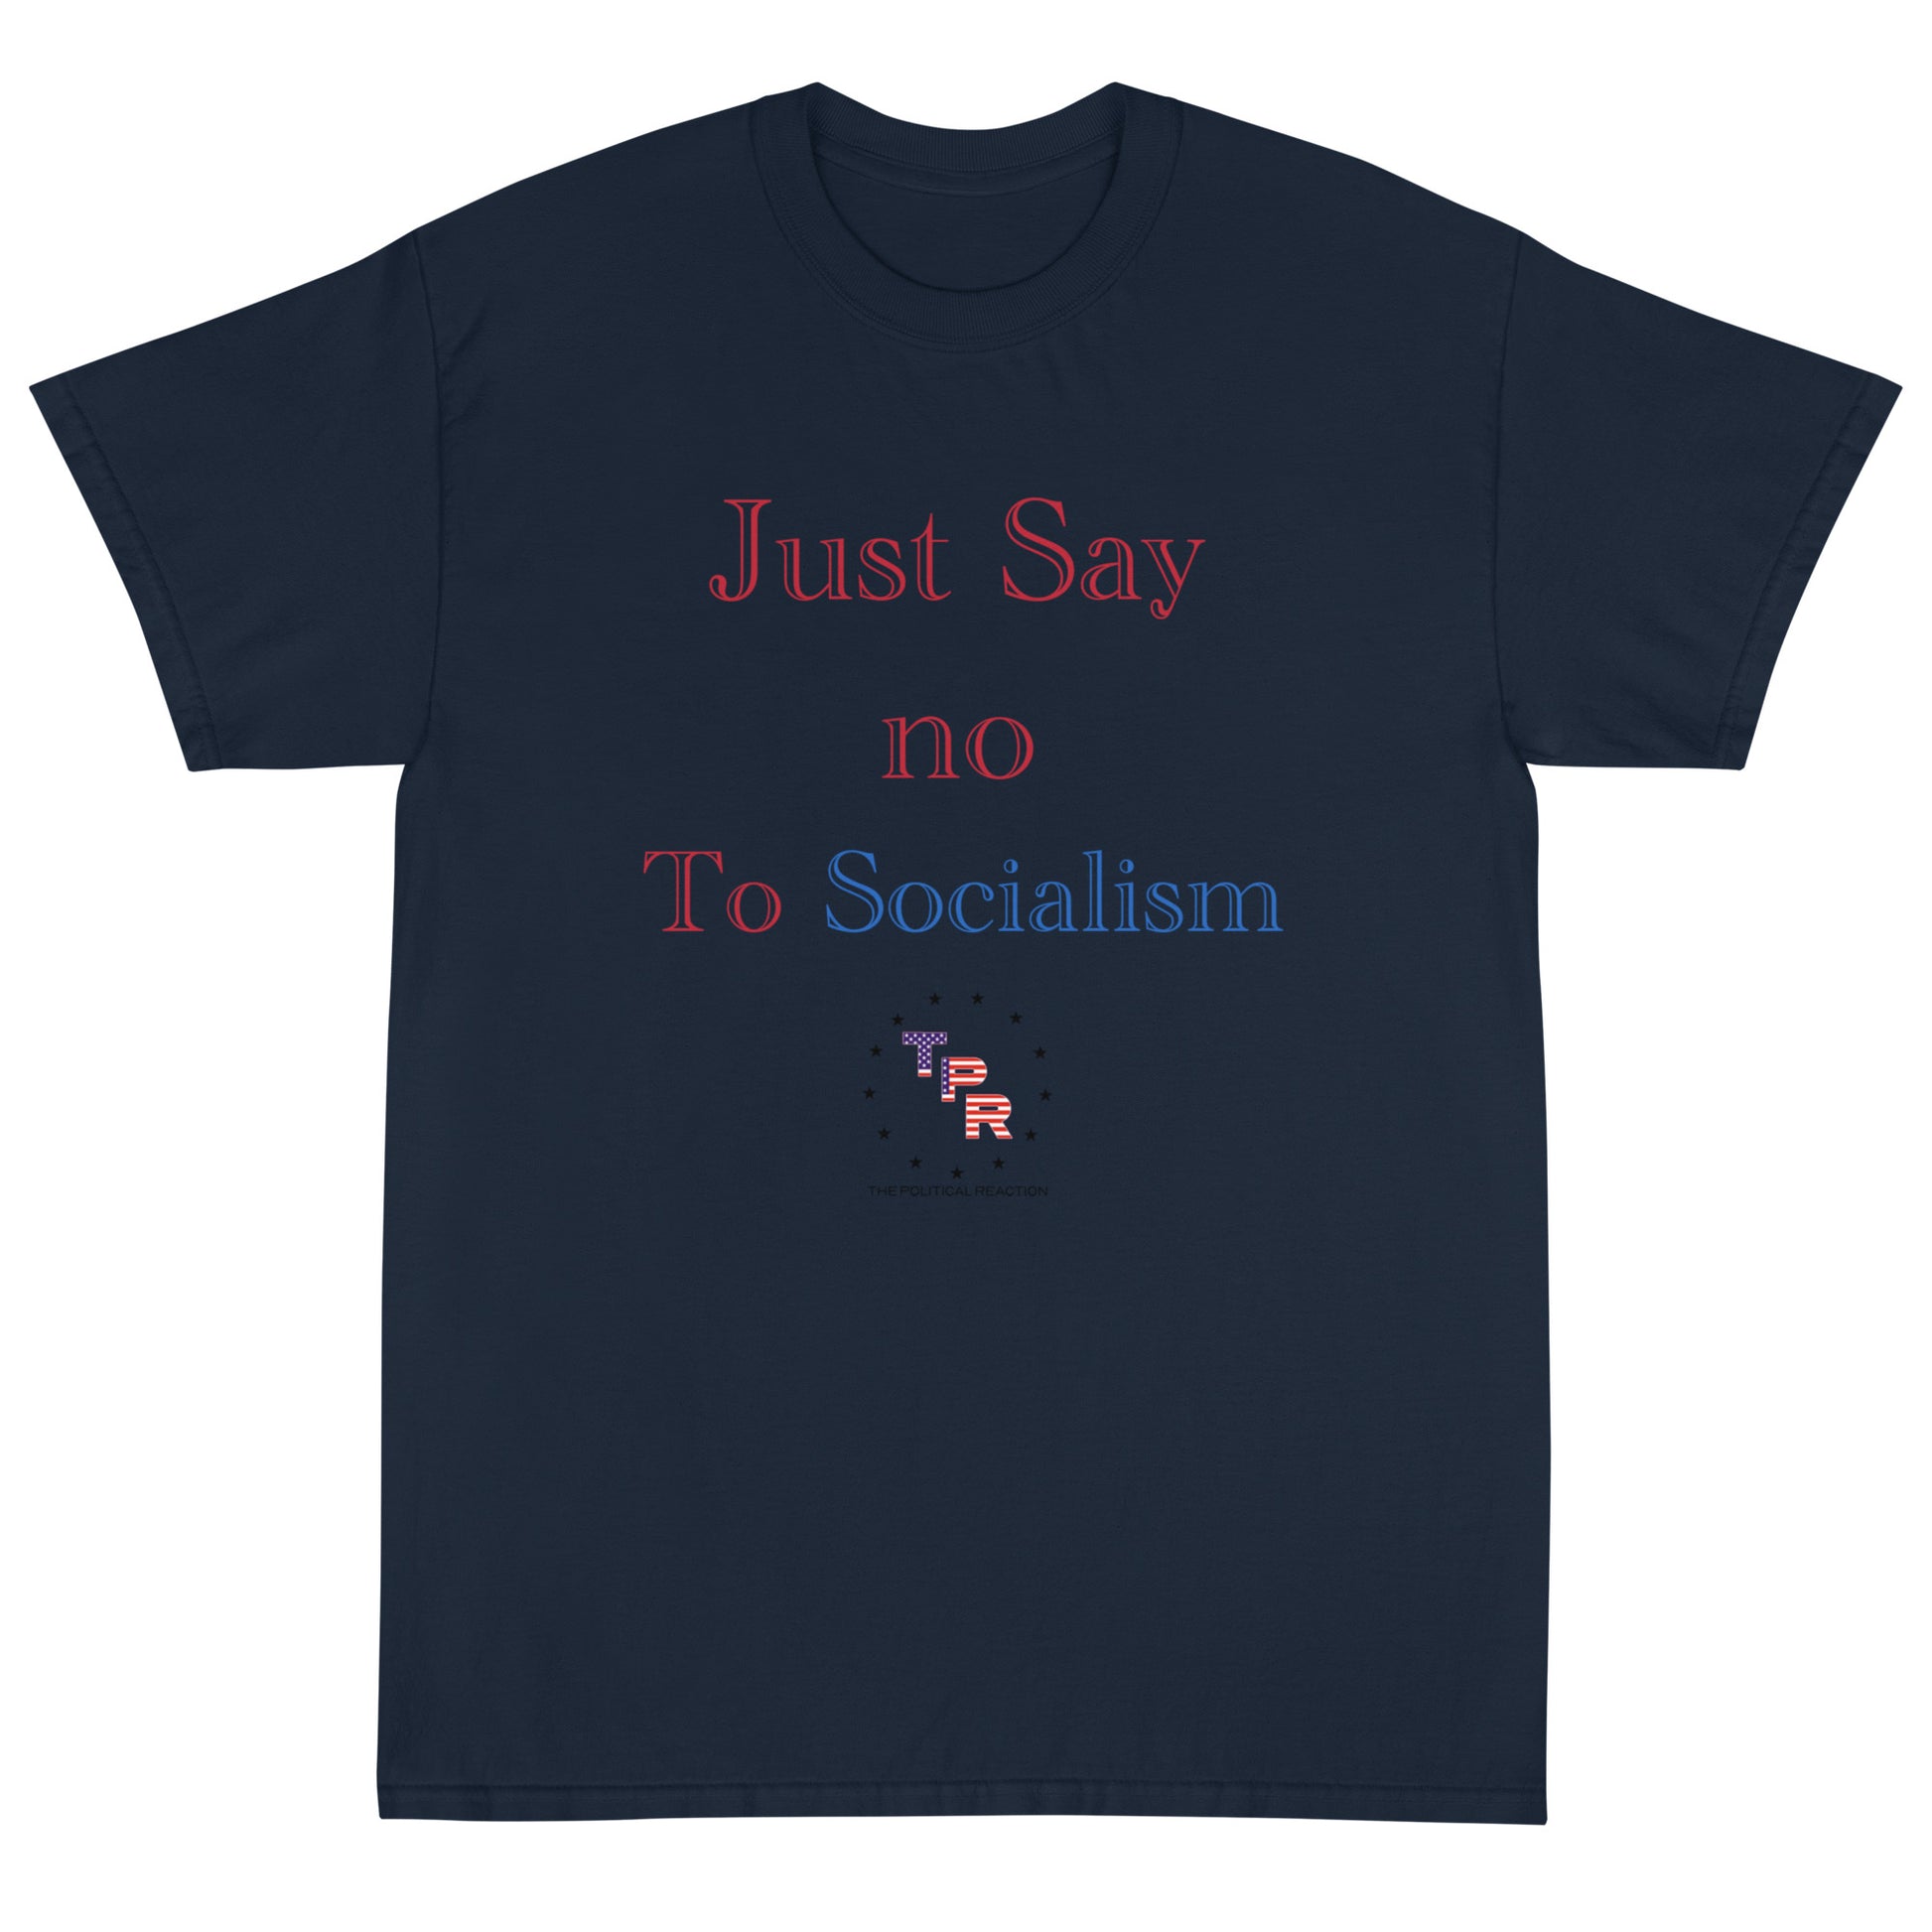 Just-say-no-to-socialism-t-shirt-Navy